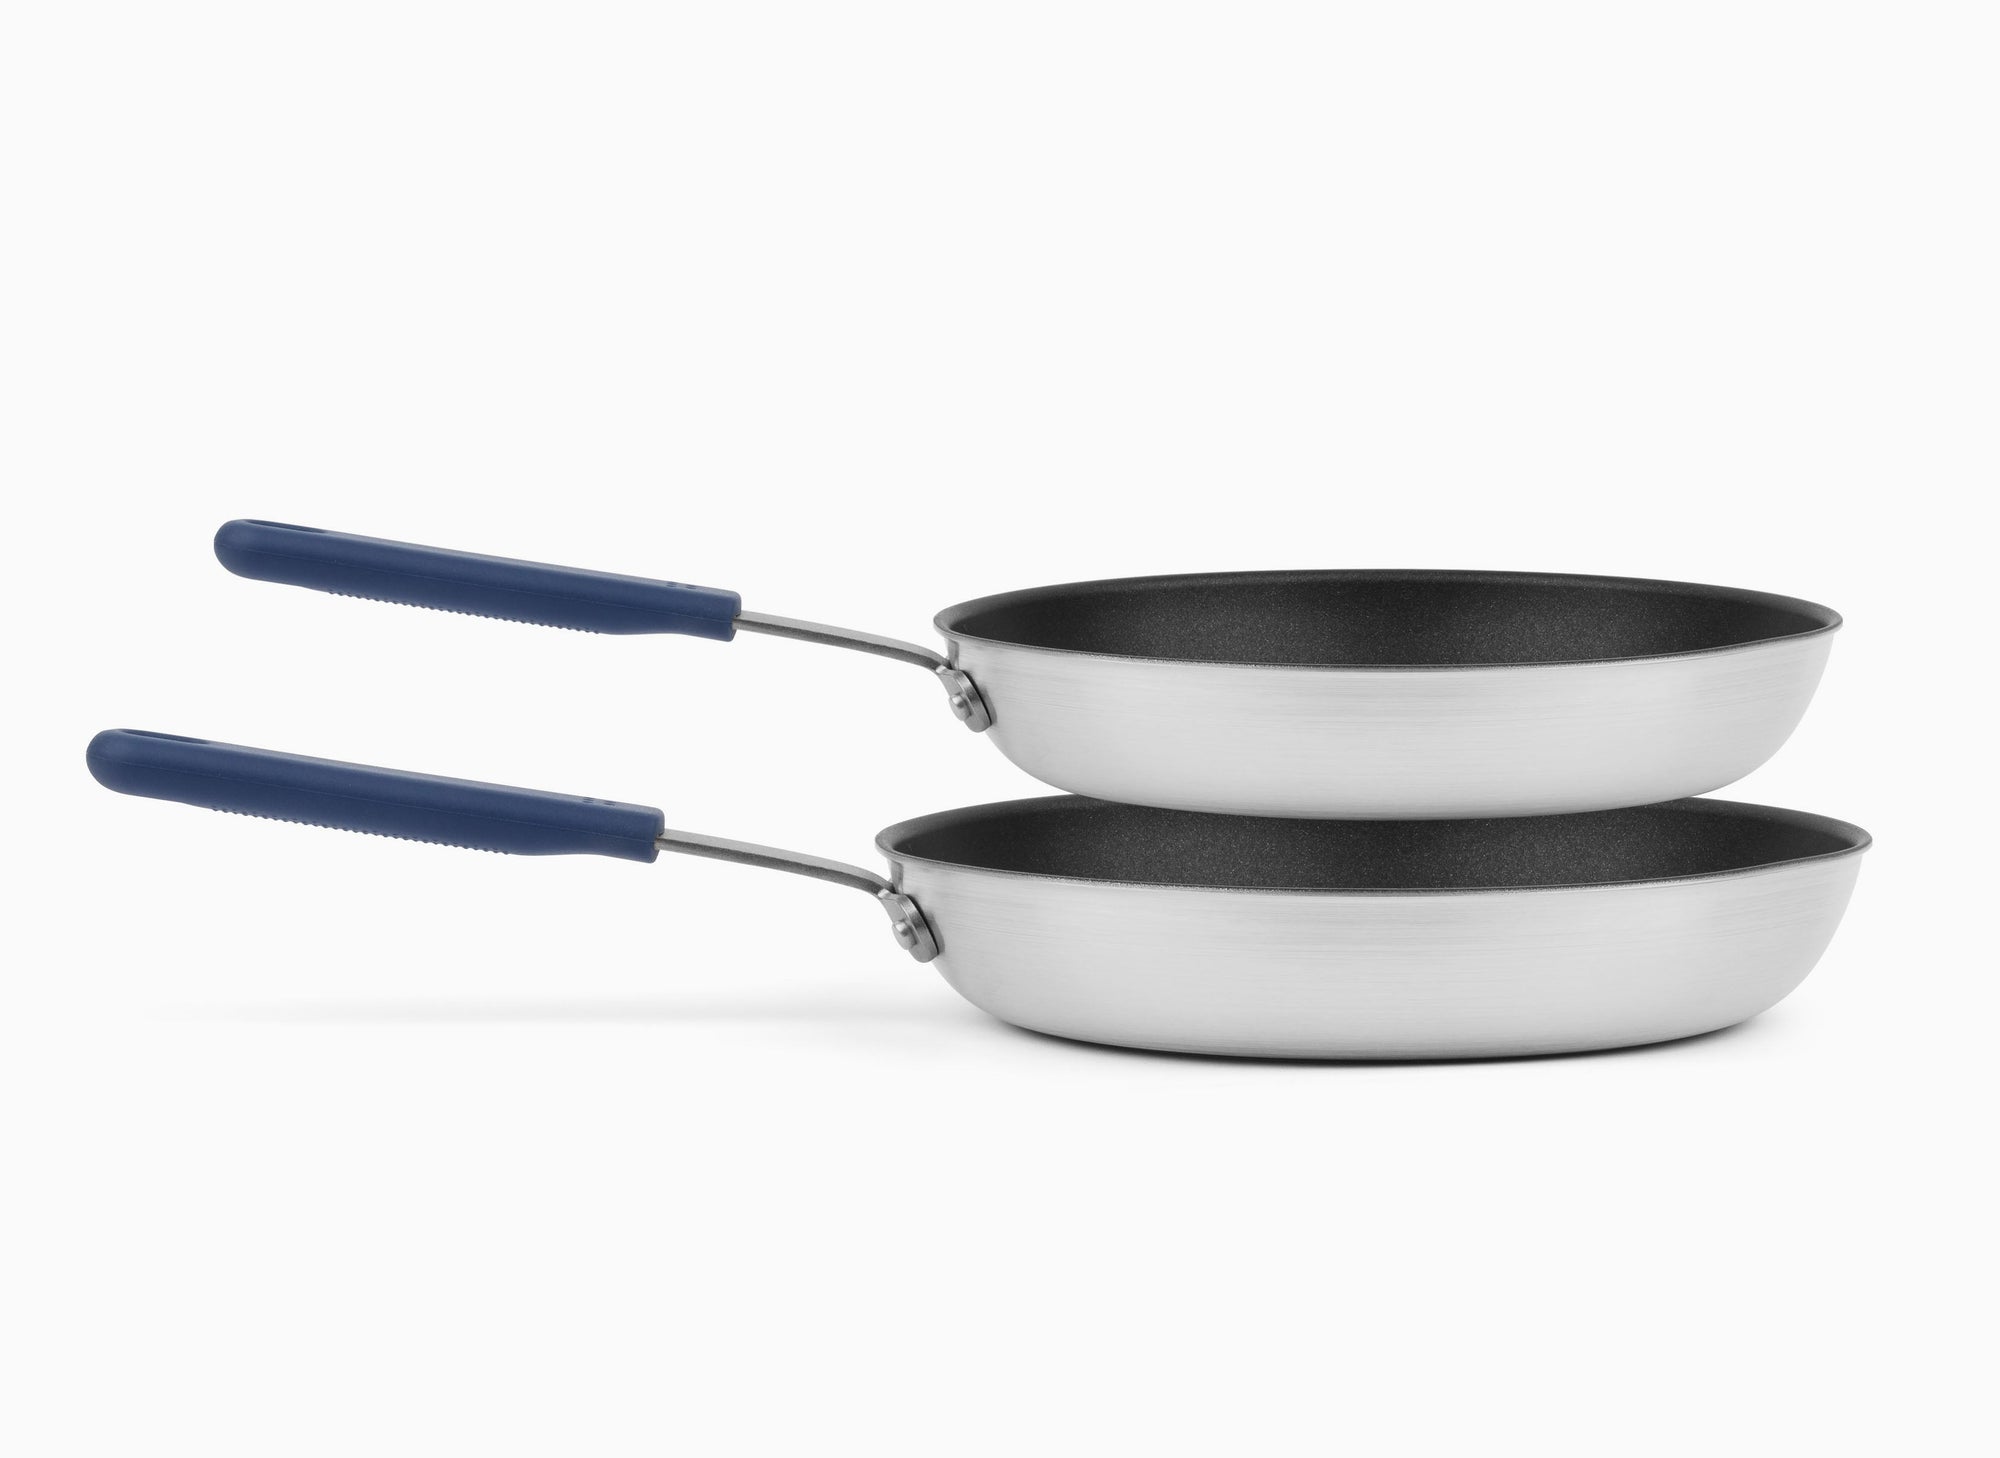 Misen Nonstick Pots and Pans Set Nonstick Cookware Sets 5 Piece Starter  Kitchen